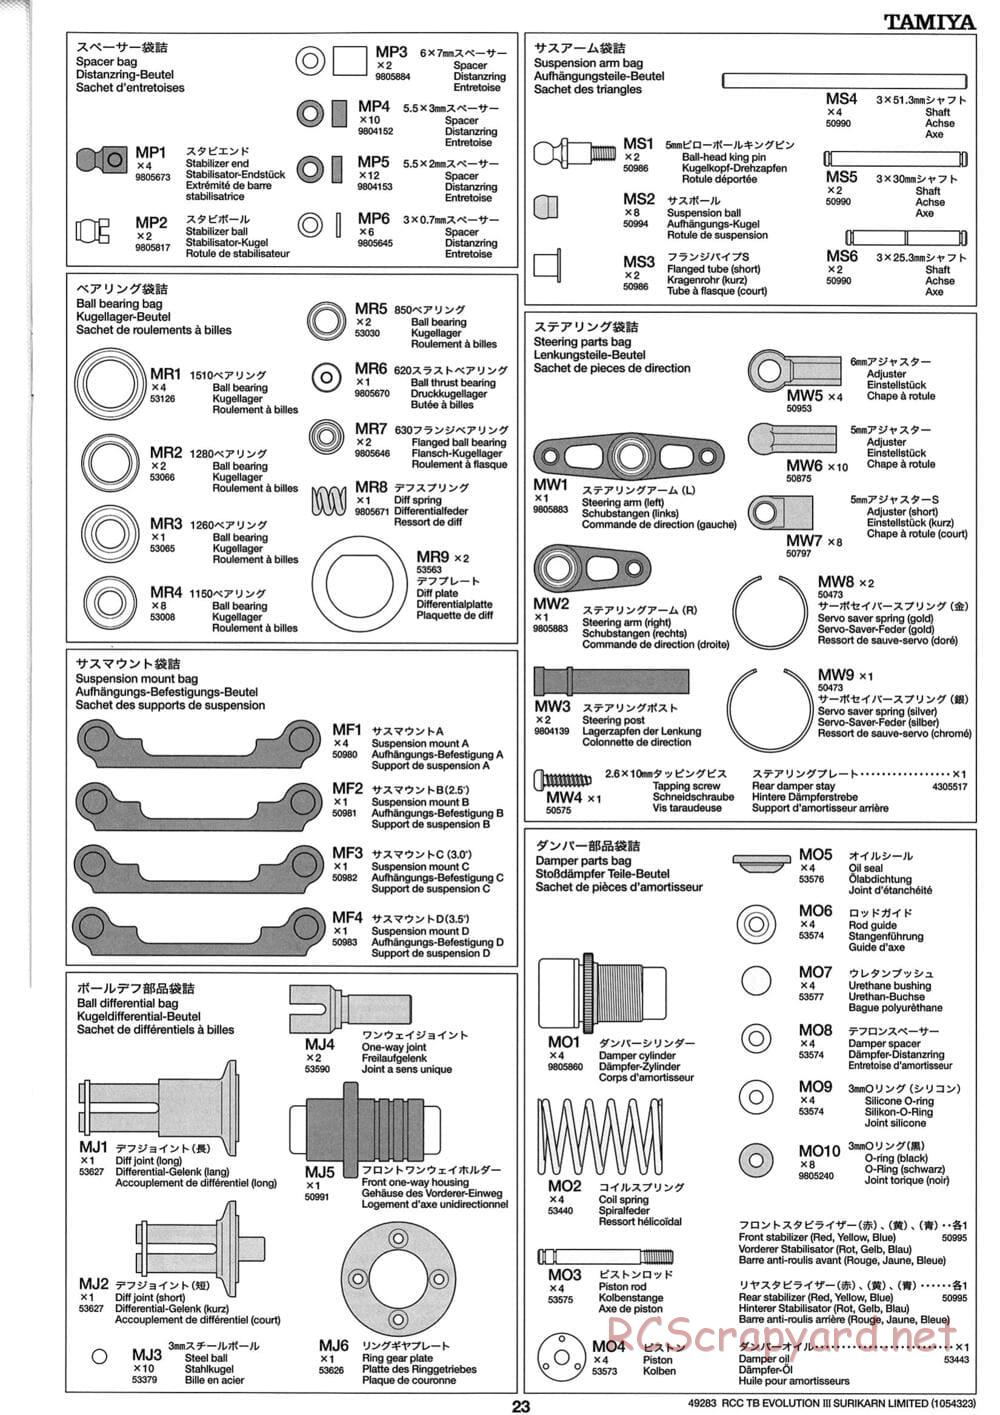 Tamiya - TB Evolution III Surikarn Limited Chassis - Manual - Page 23